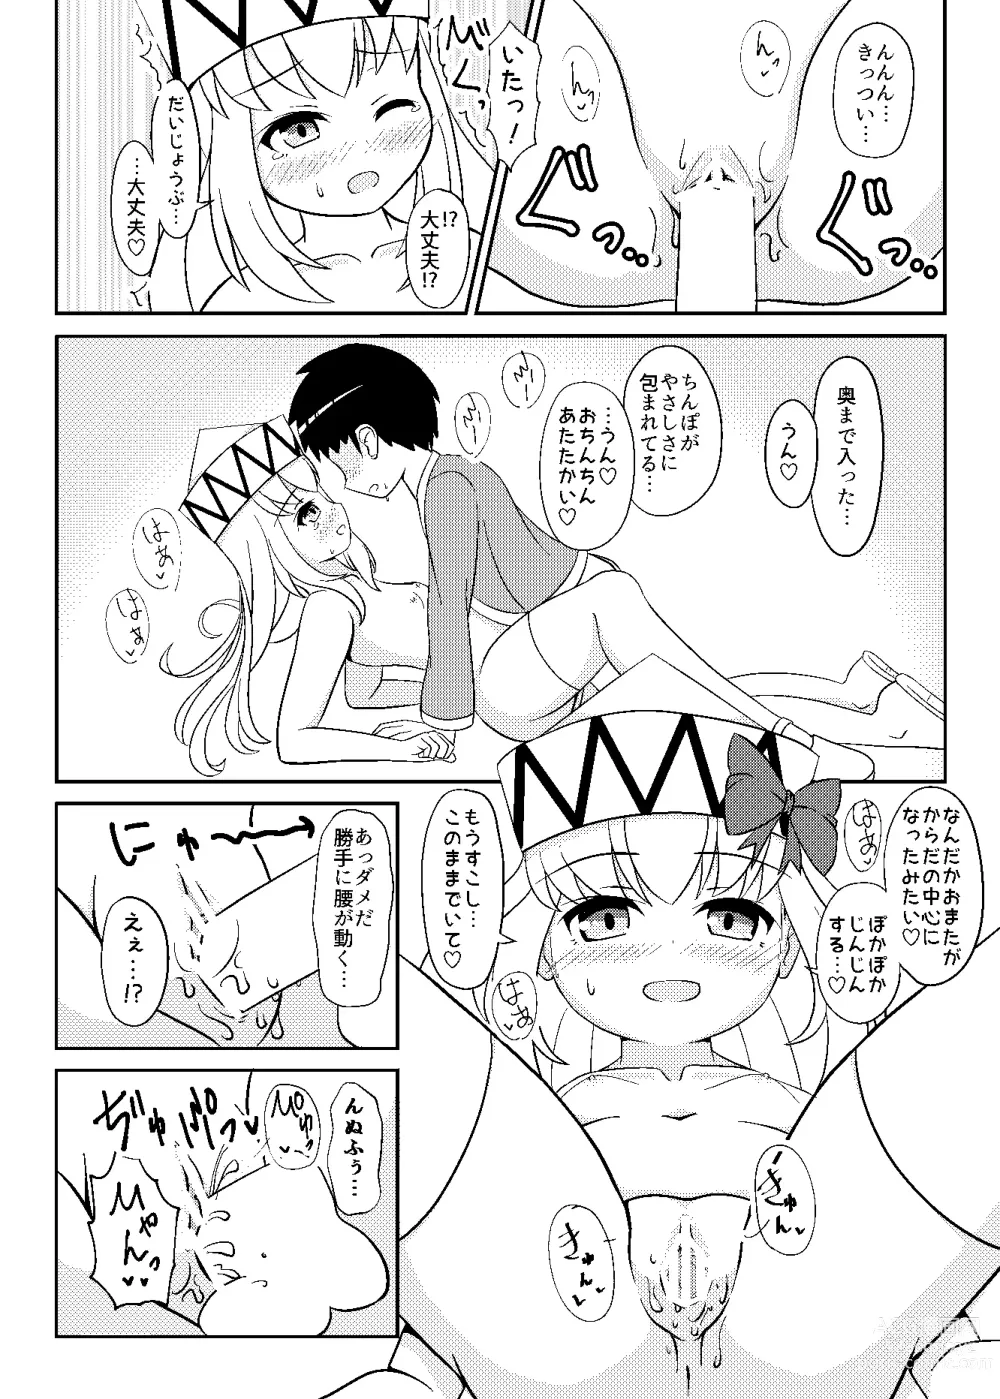 Page 24 of doujinshi Lily to Ohanatsumi